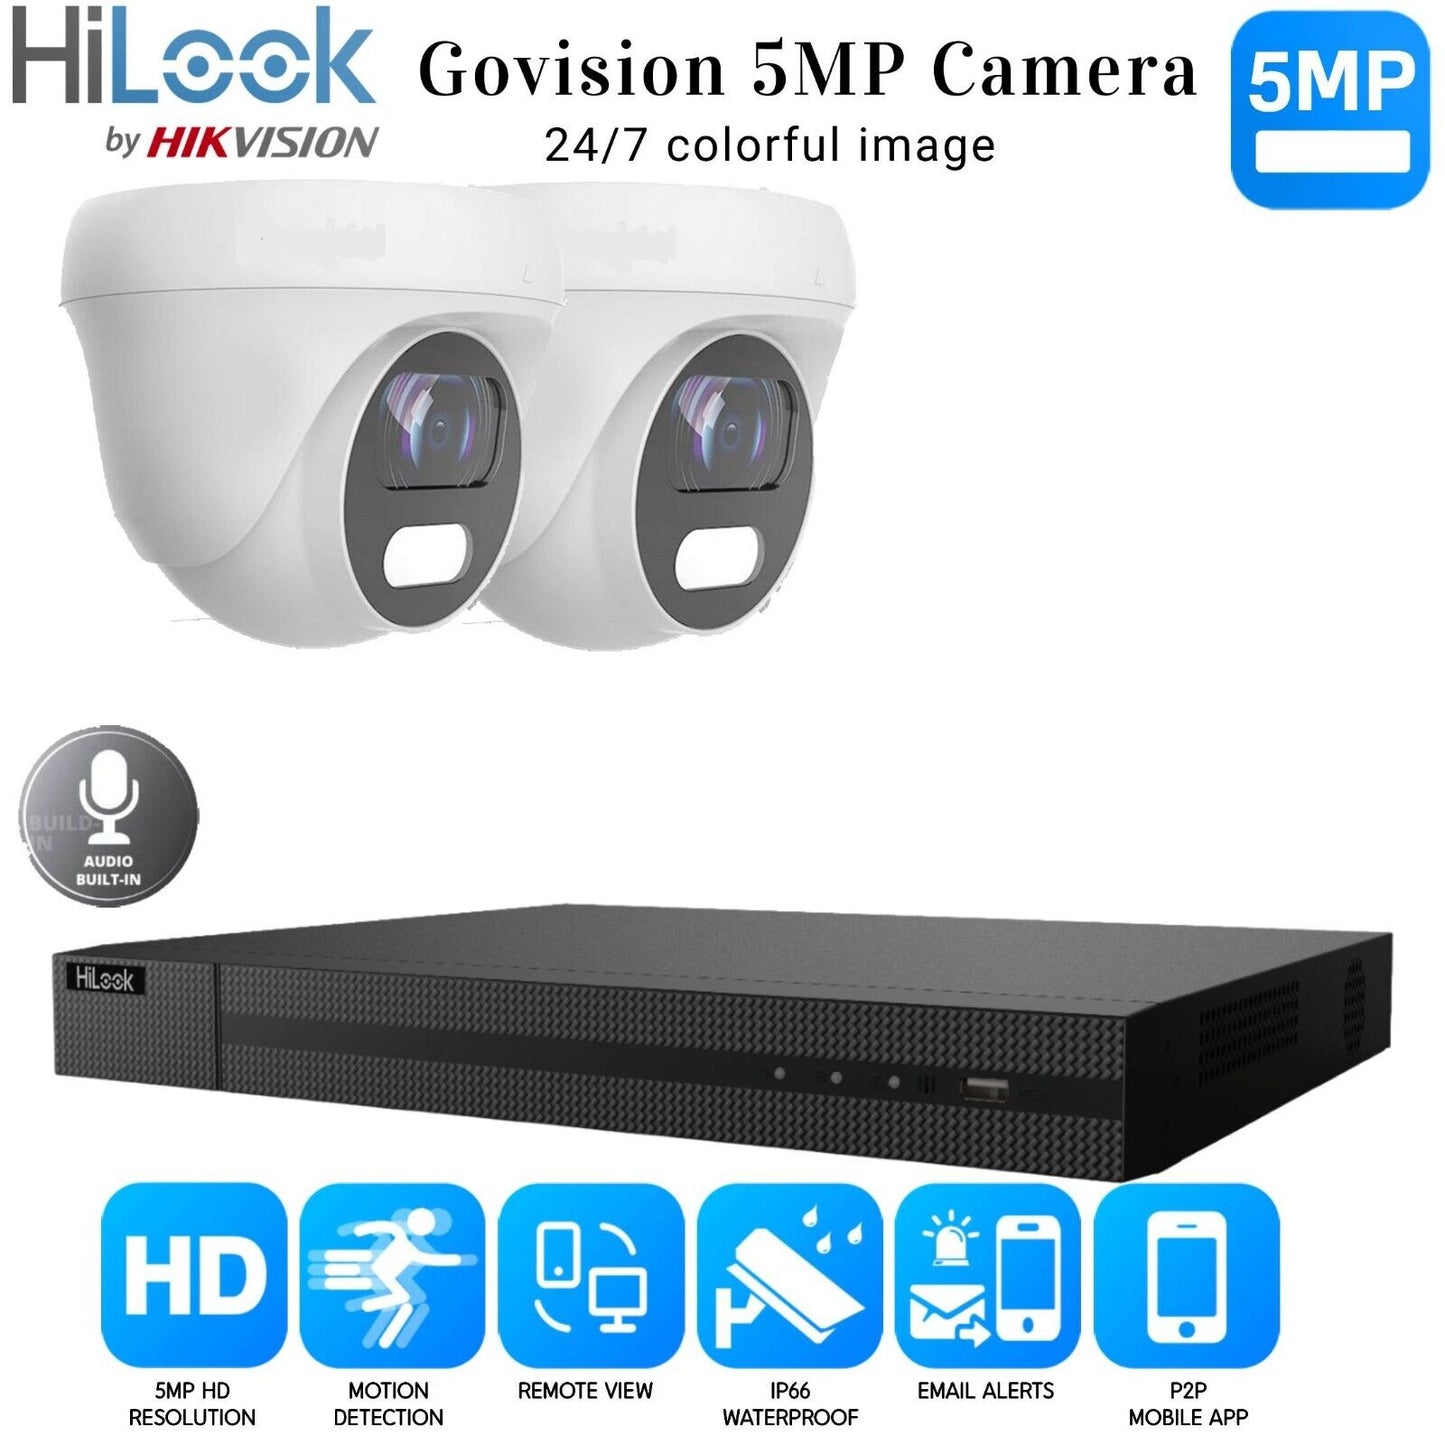 HIKVISION COLORVU CCTV SYSTEM HD 5MP 24/7 COLORVu CAMERA KIT UK 4CH DVR 2x Cameras (white) 1TB HDD